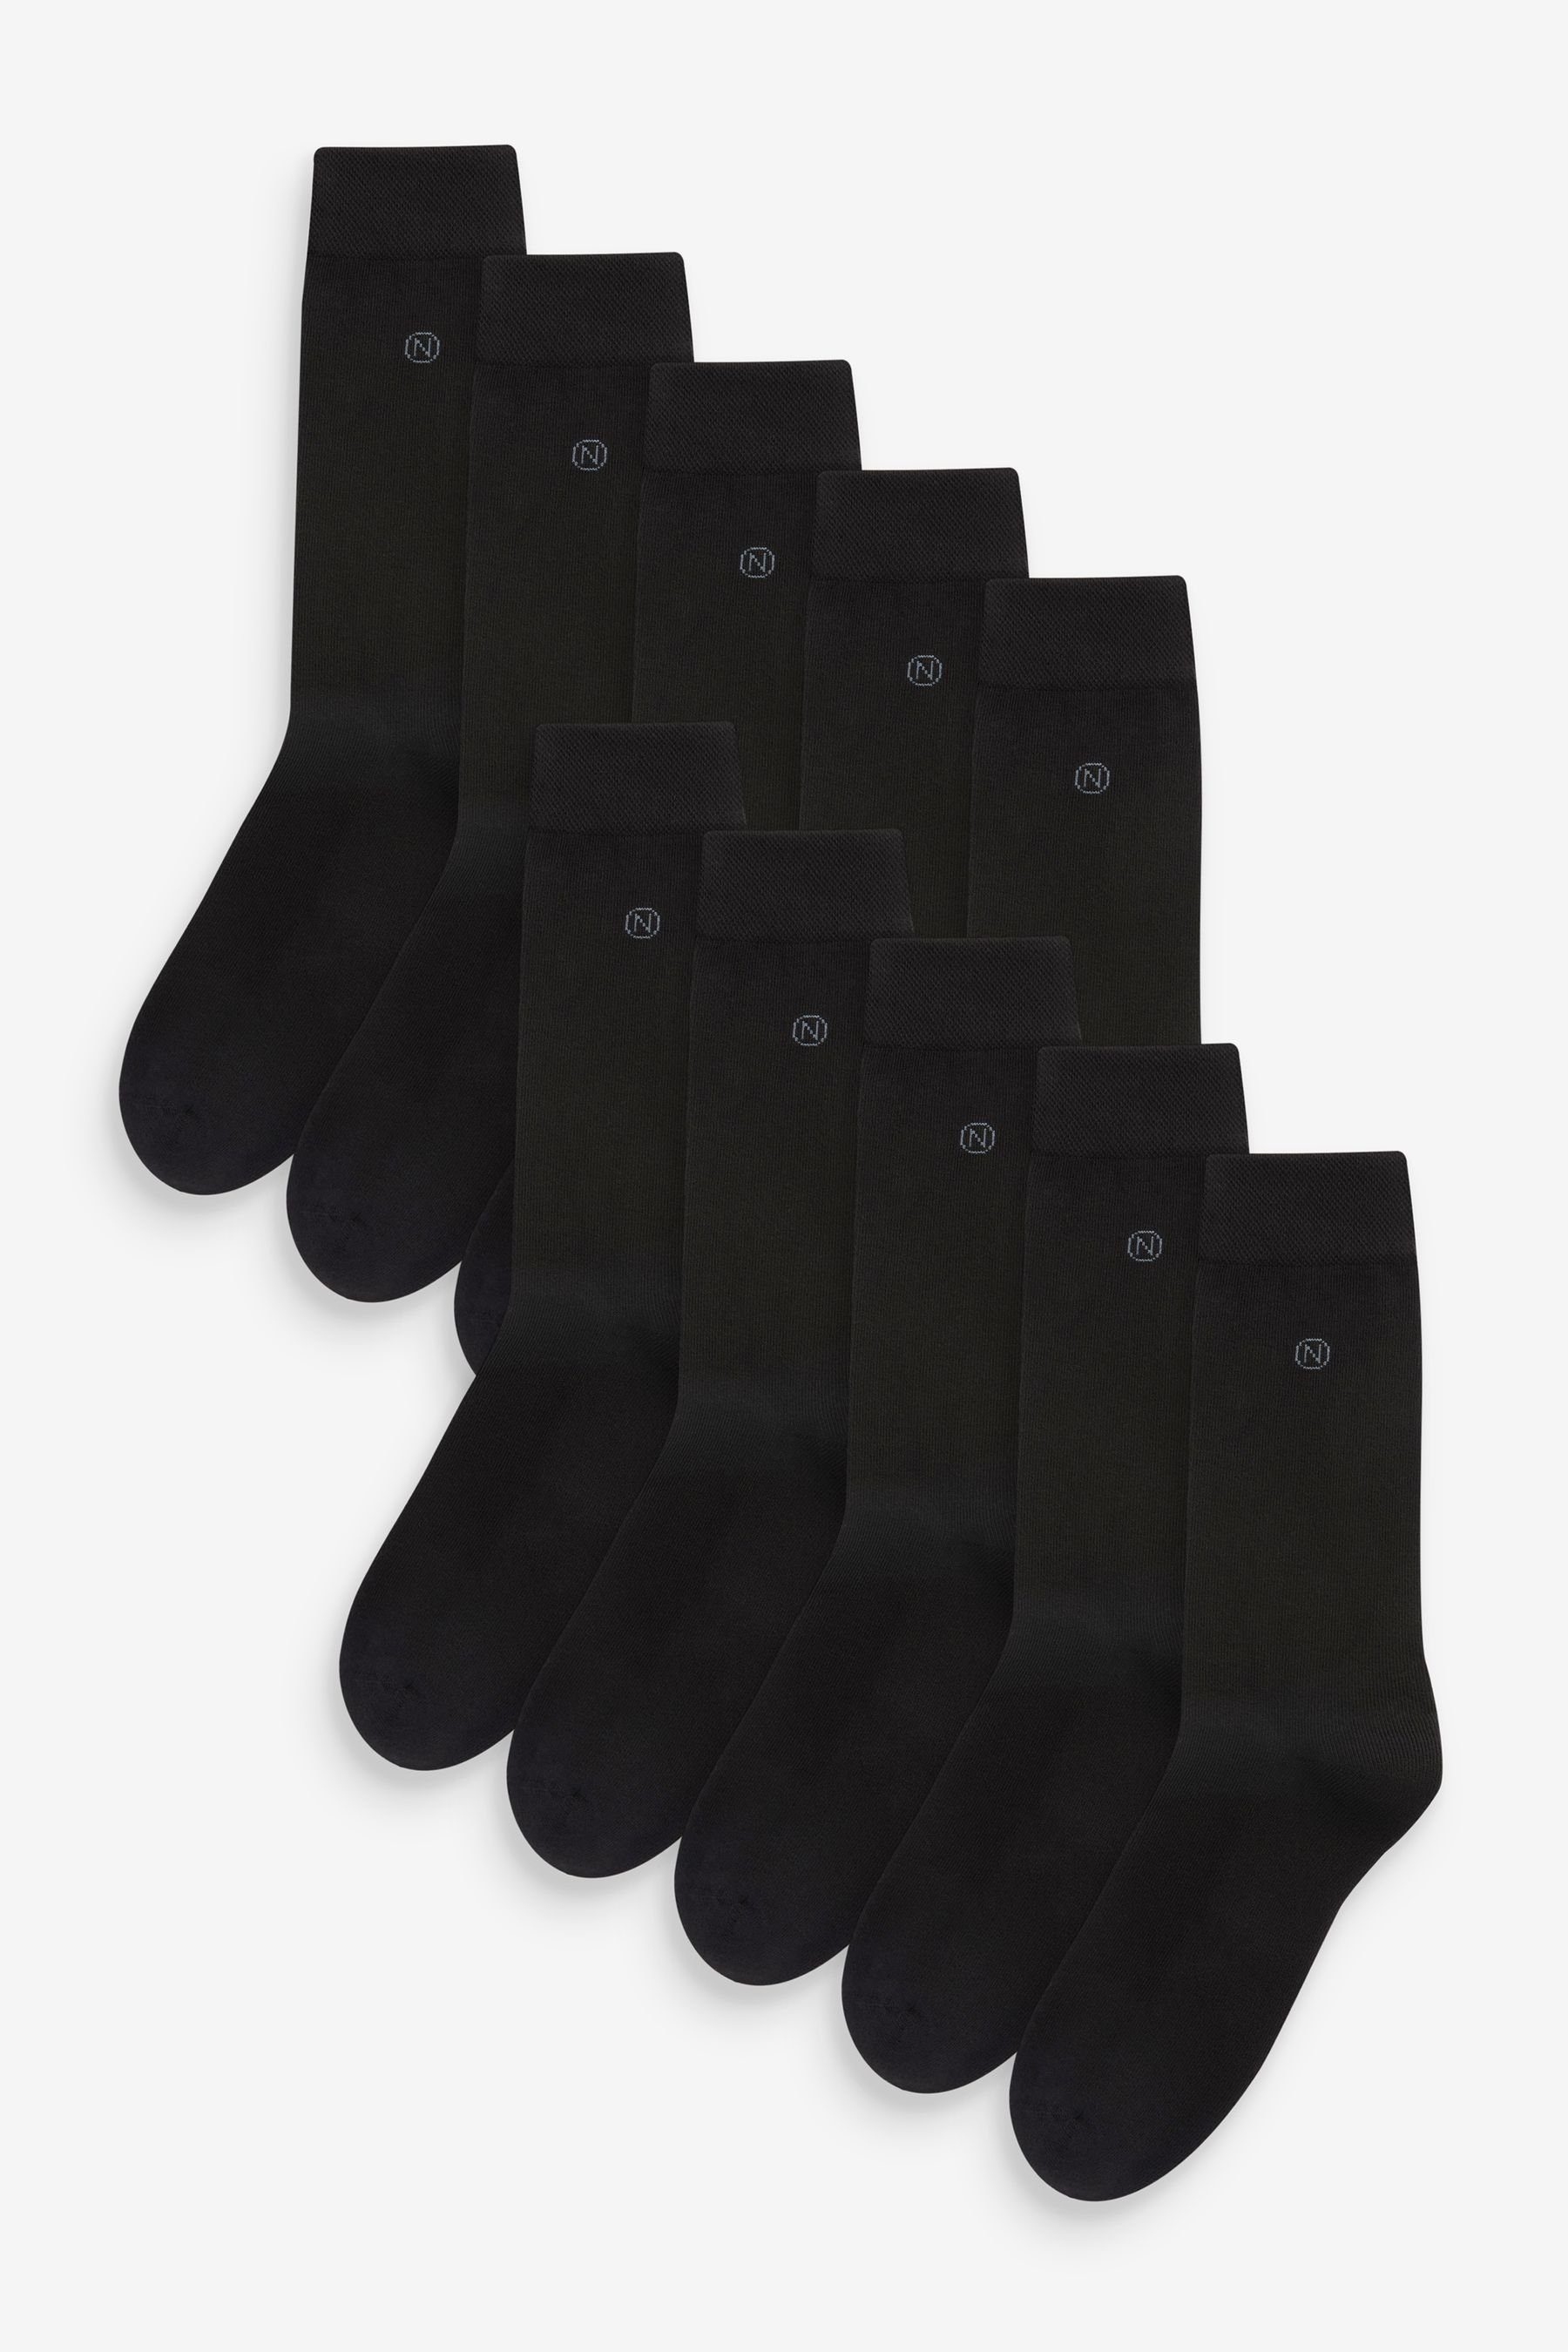 Next Kurzsocken Socken mit gepolsterter Sohle, 10er-Pack (10-Paar) Black